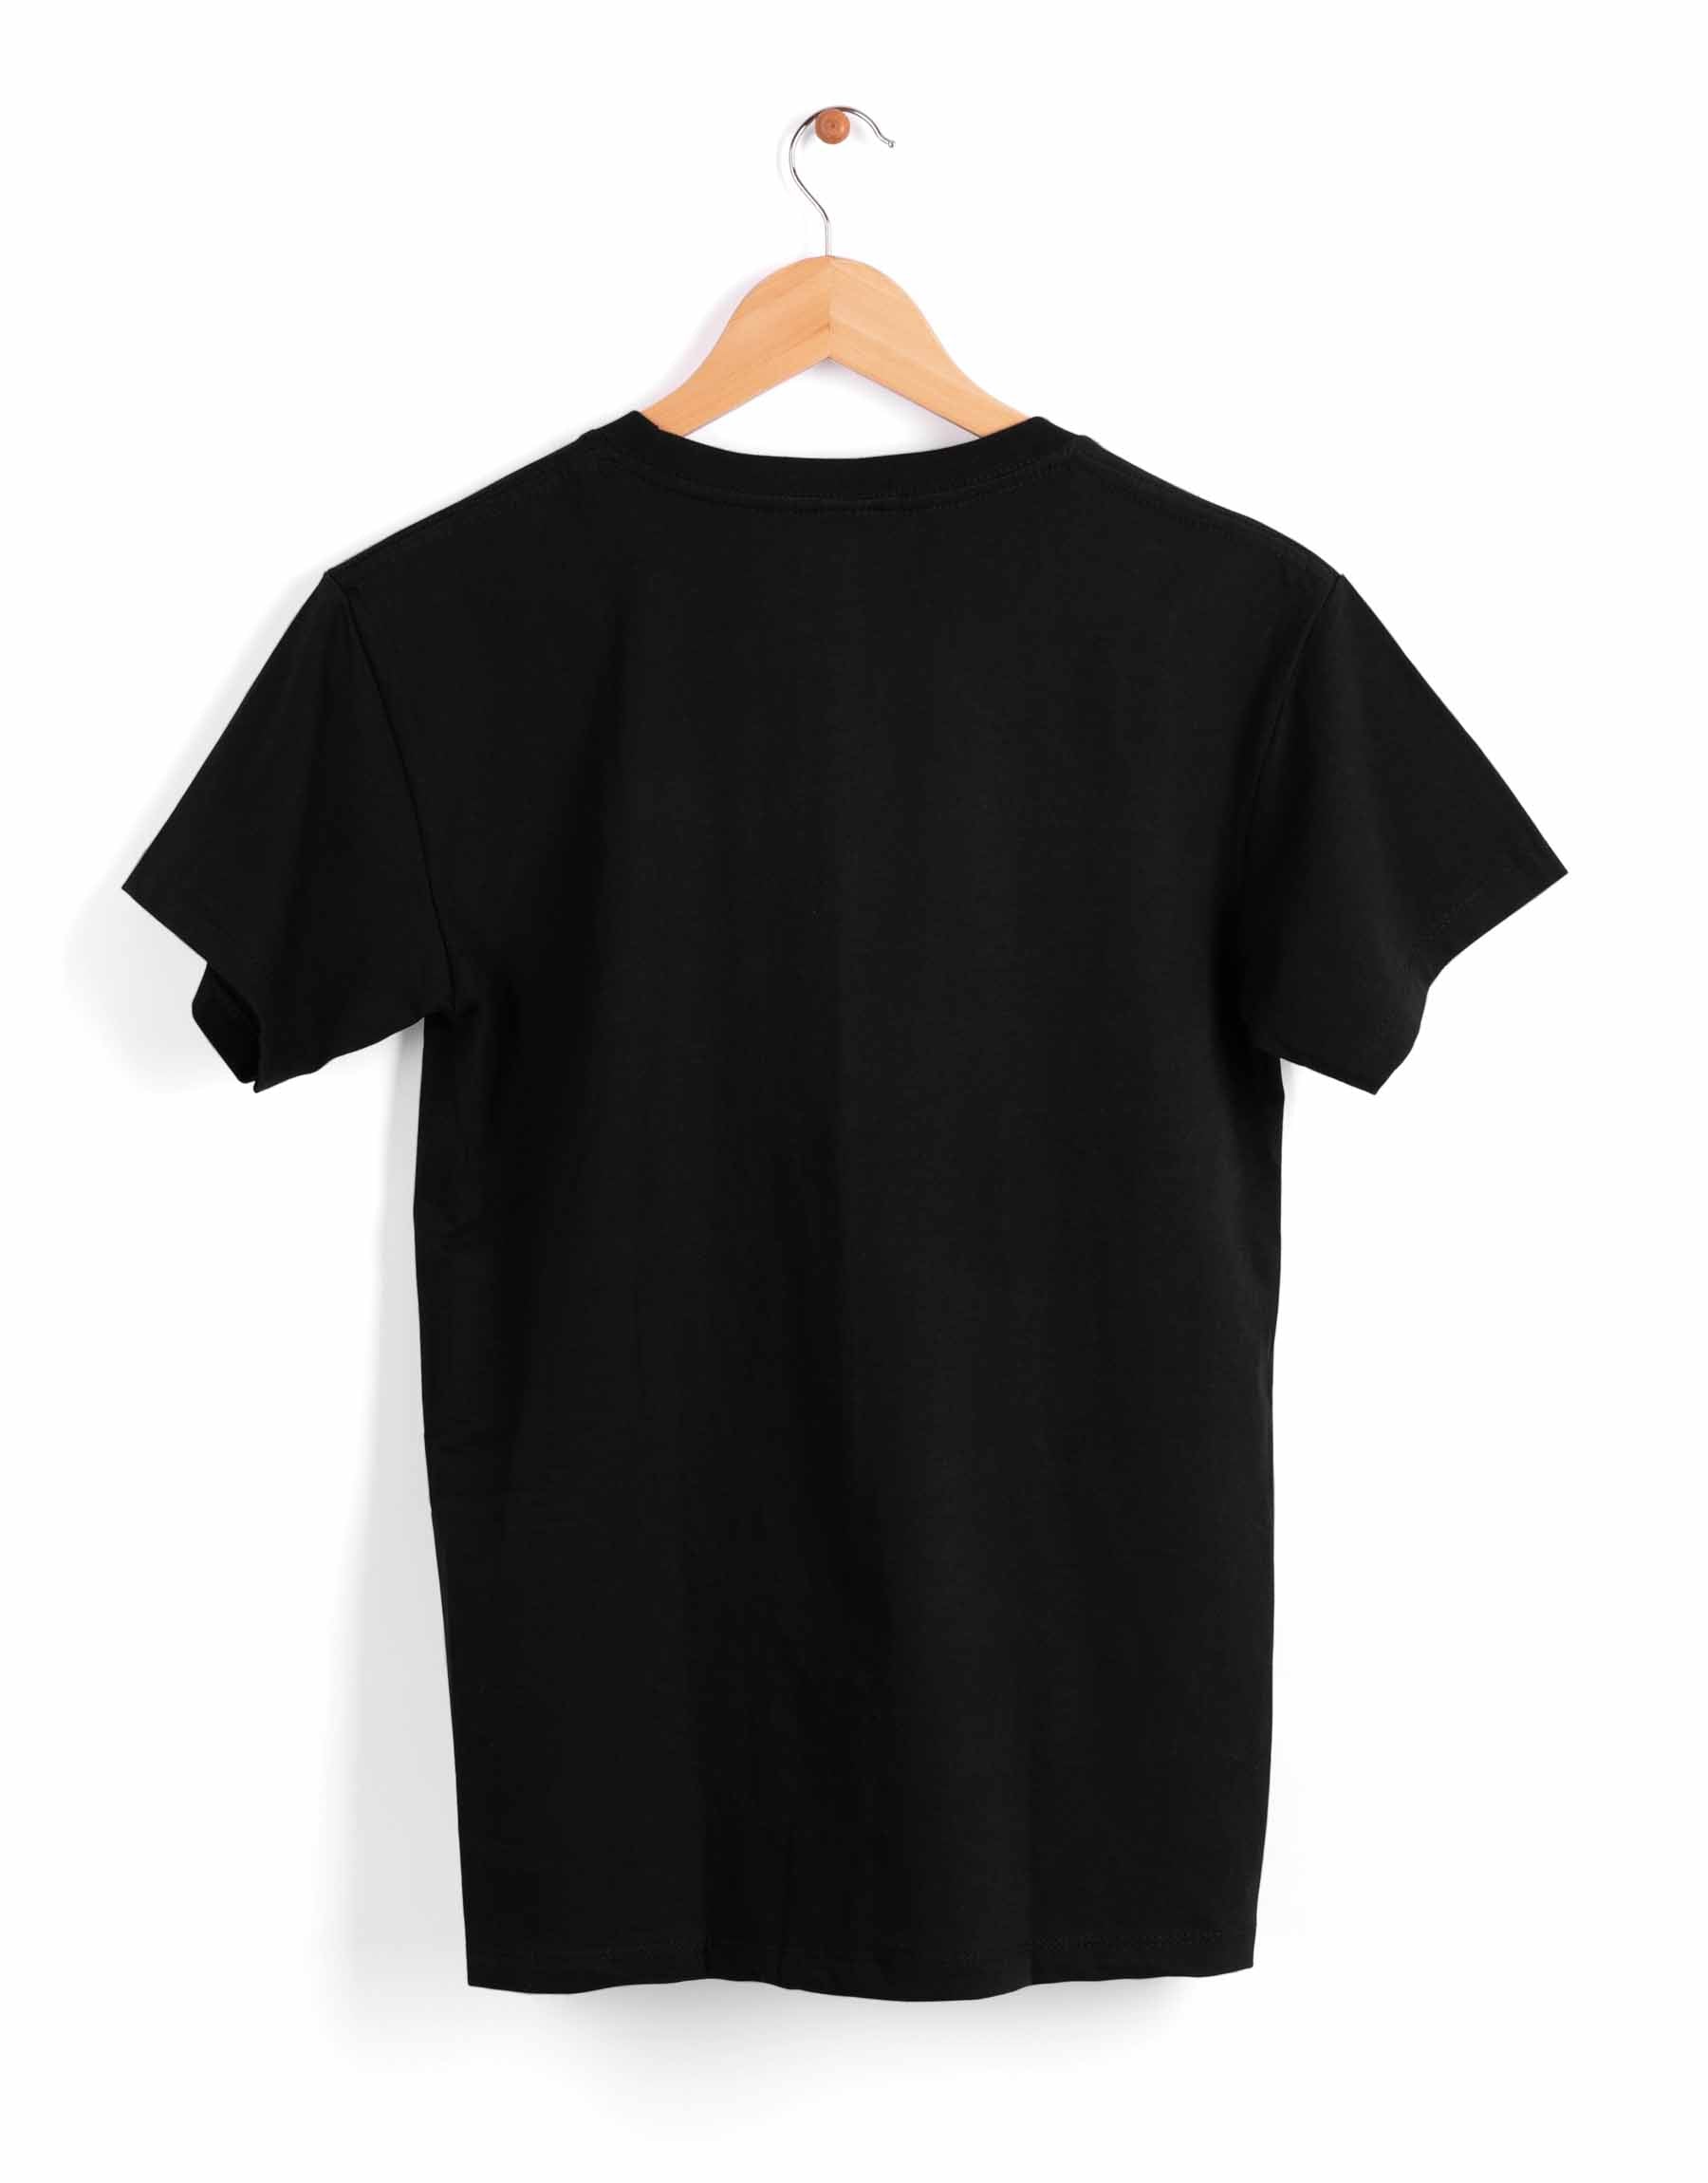 Bored Stylish Printed T-Shirt - 499.00 - TEEGURUJI - Free Shipping